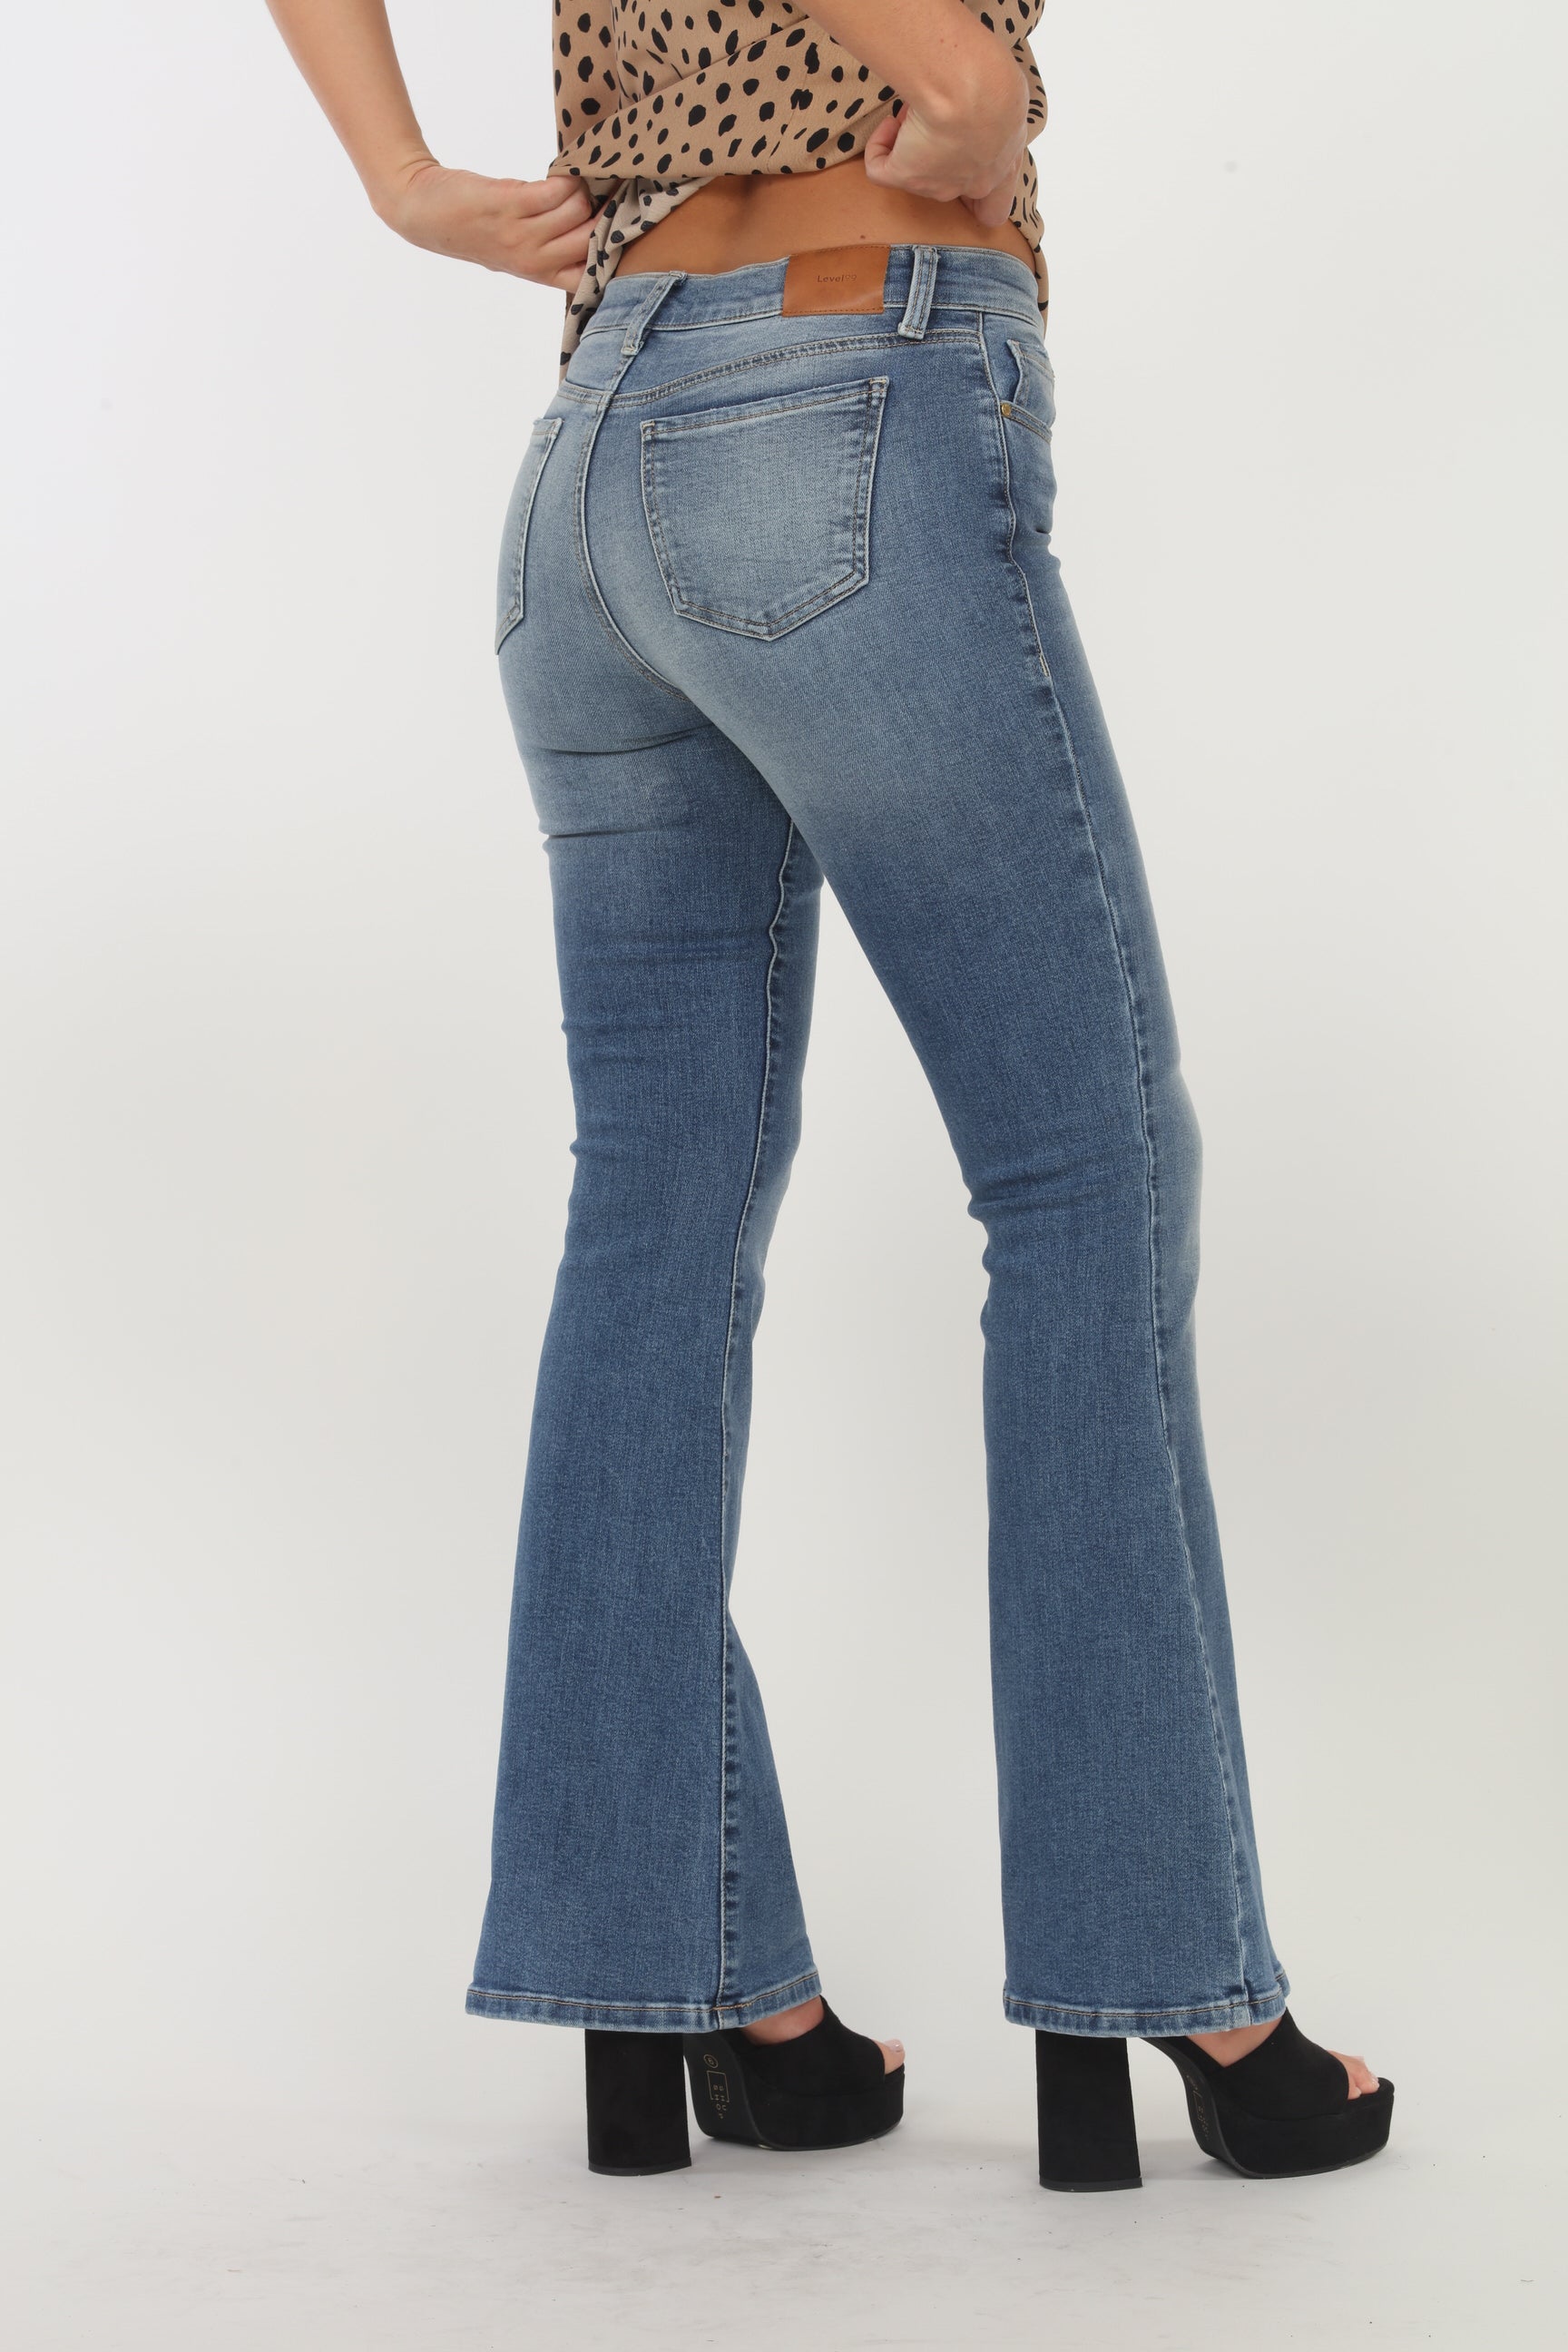 Level 99 Dahlia Mid Rise Flare Jeans - Medium Wash-FINAL SALE